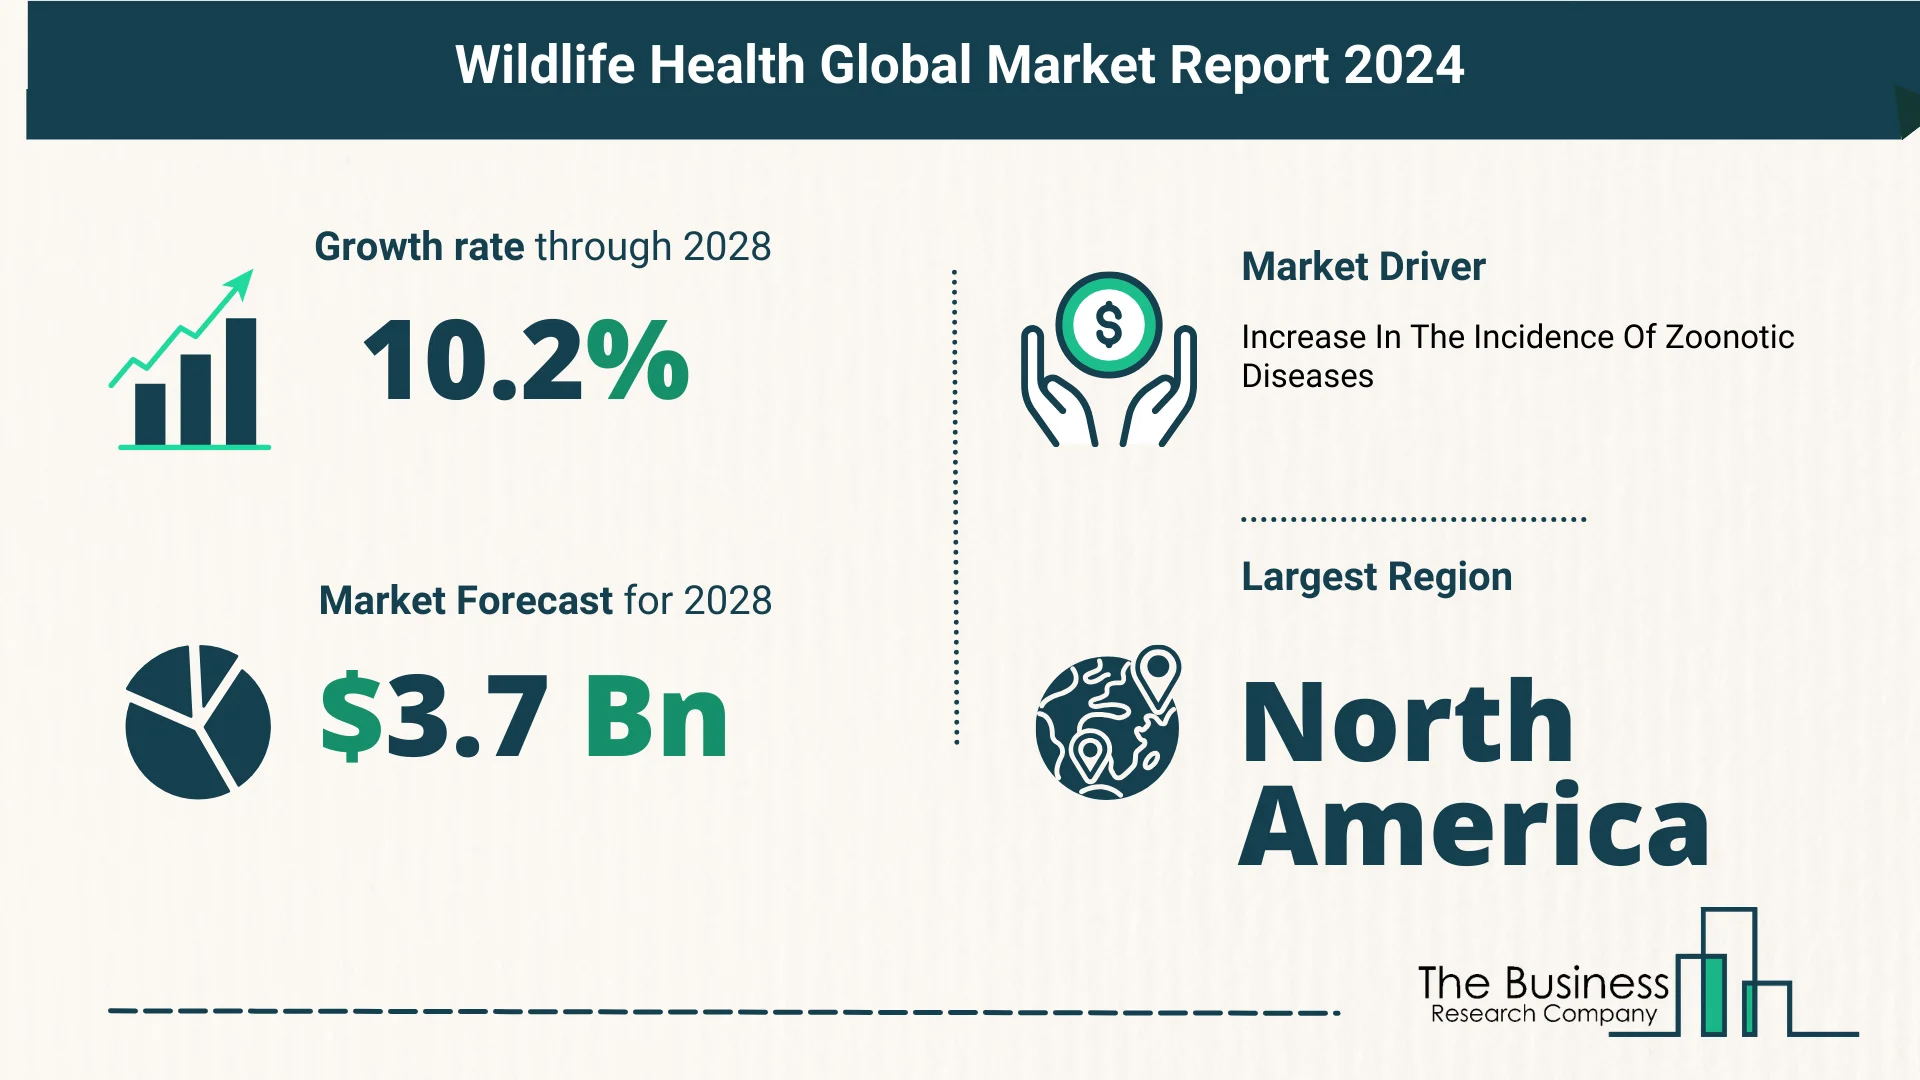 Global Wildlife Health Market